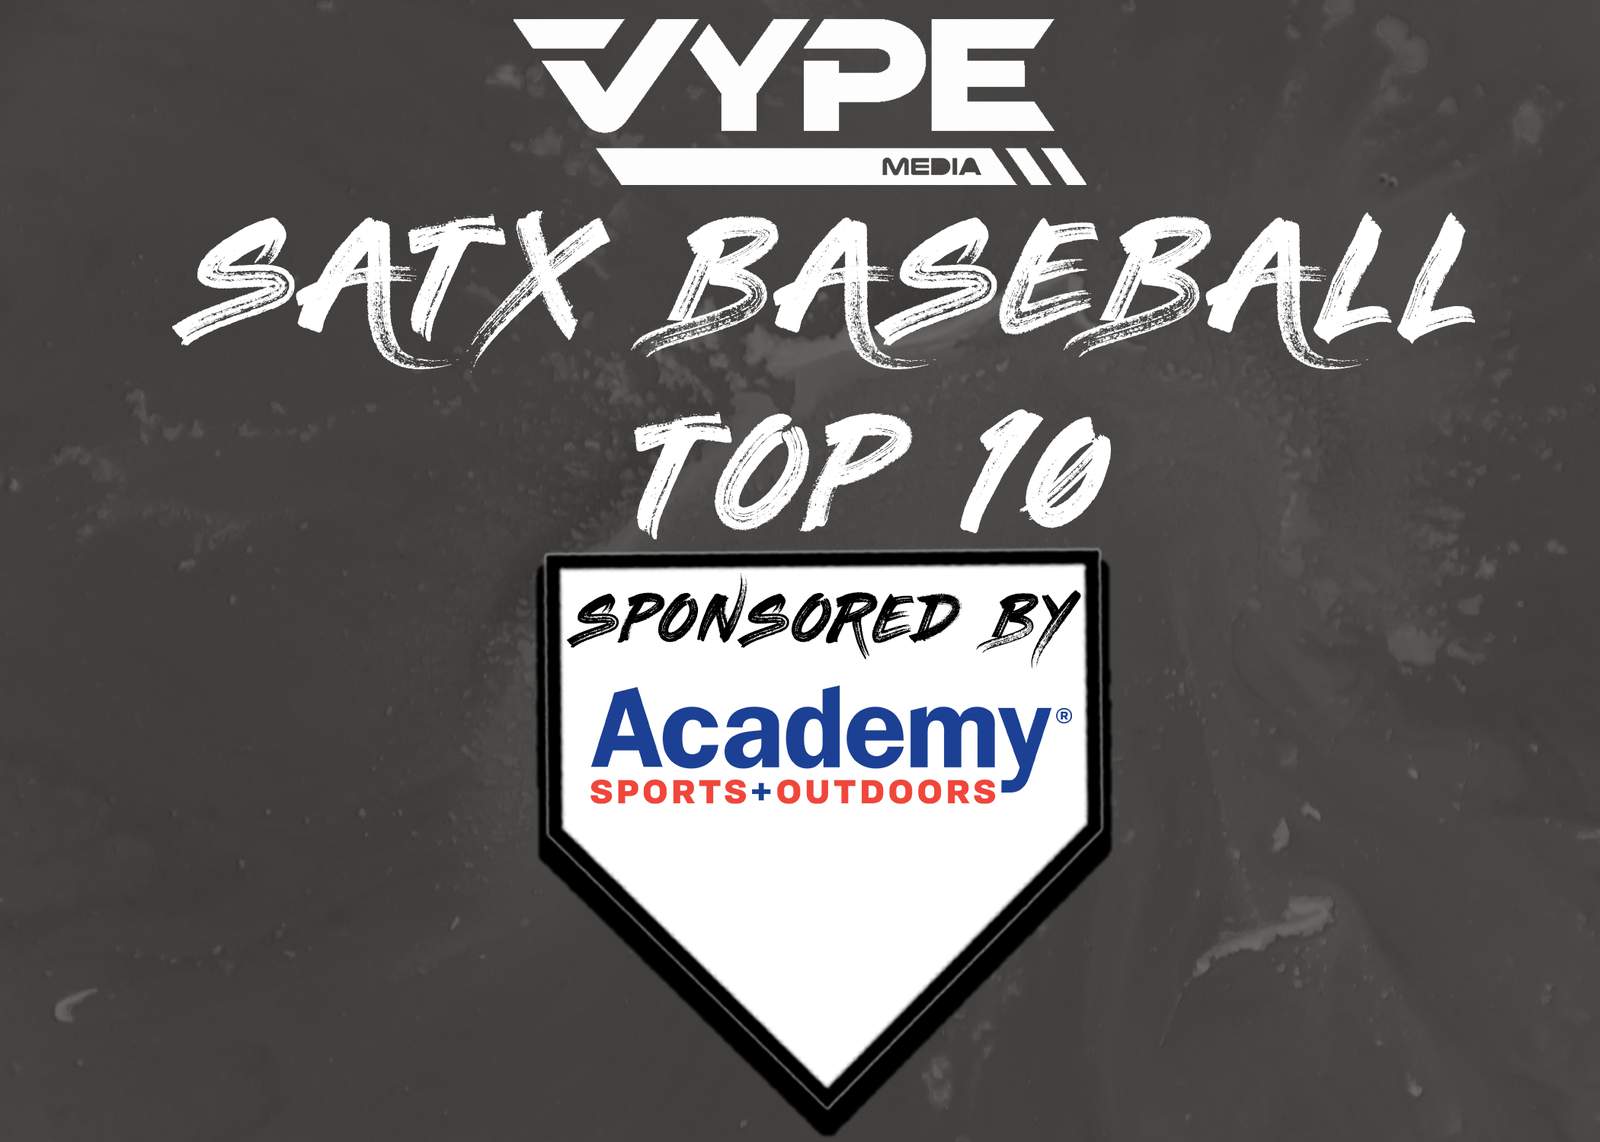 VYPE San Antonio Baseball Rankings: Week of 4/5/21 presented by Academy Sports + Outdoors